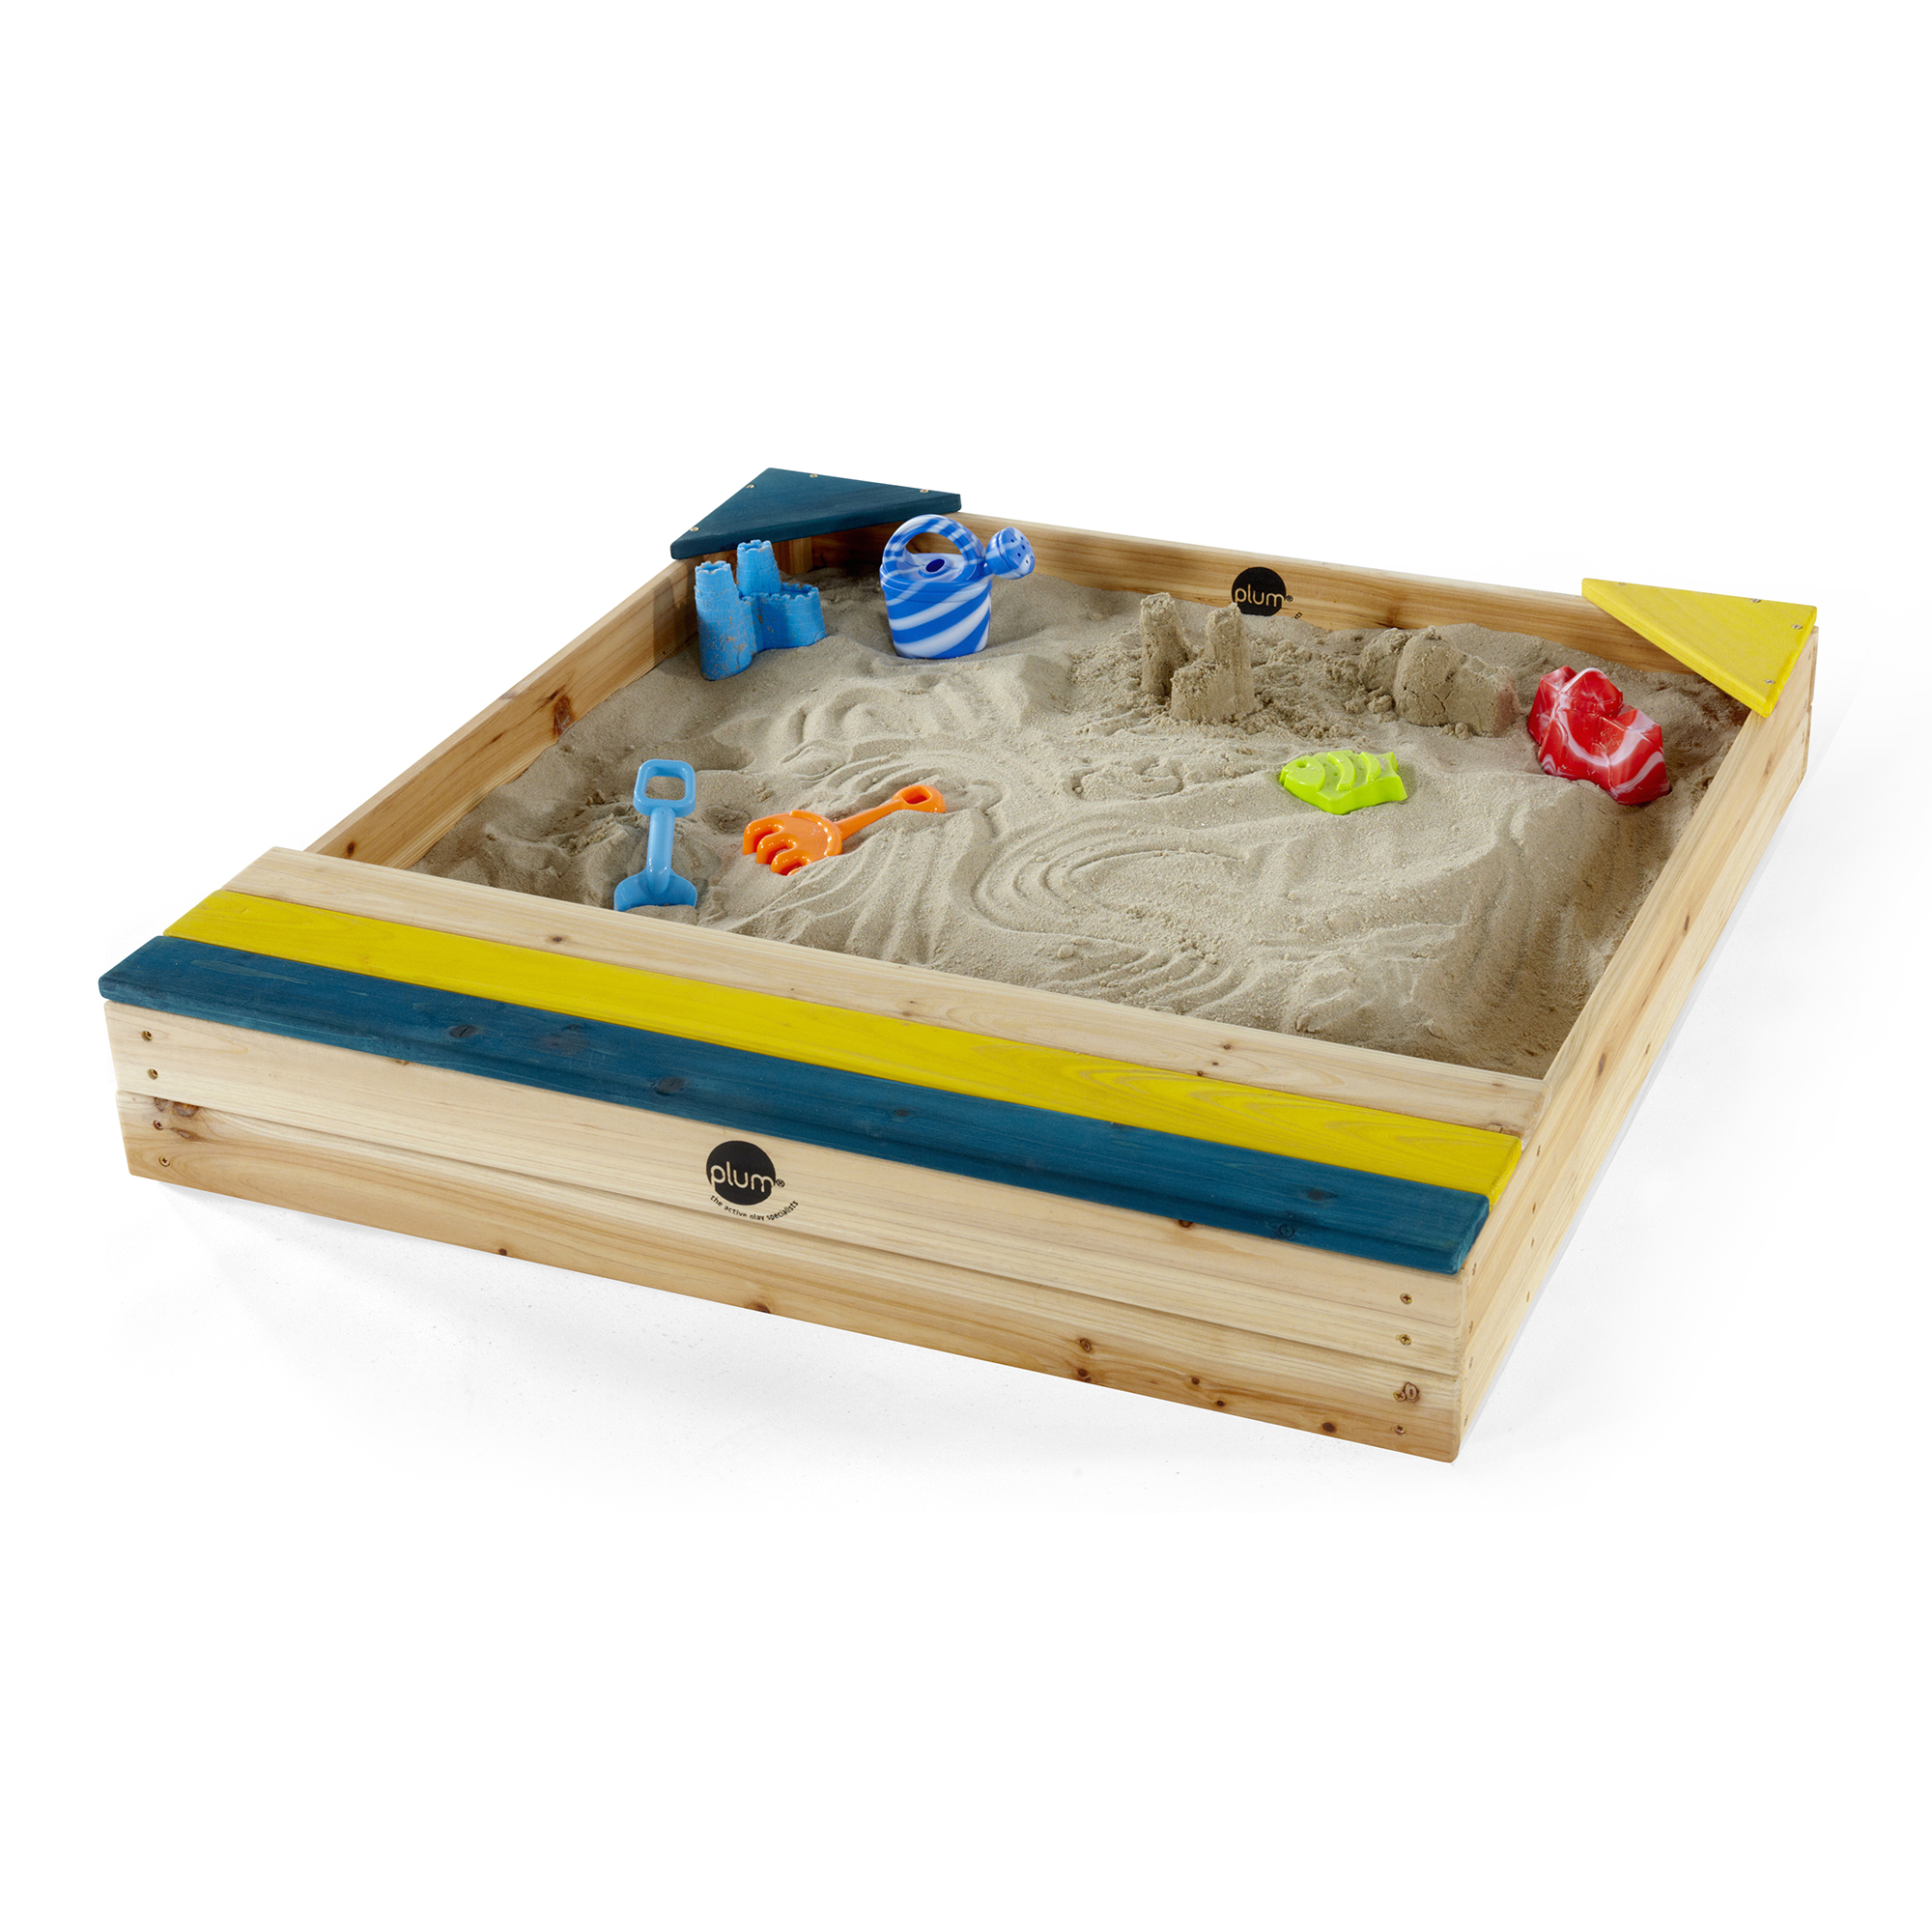 Plum Play Store-it Wooden Sandbox - image 1 of 9